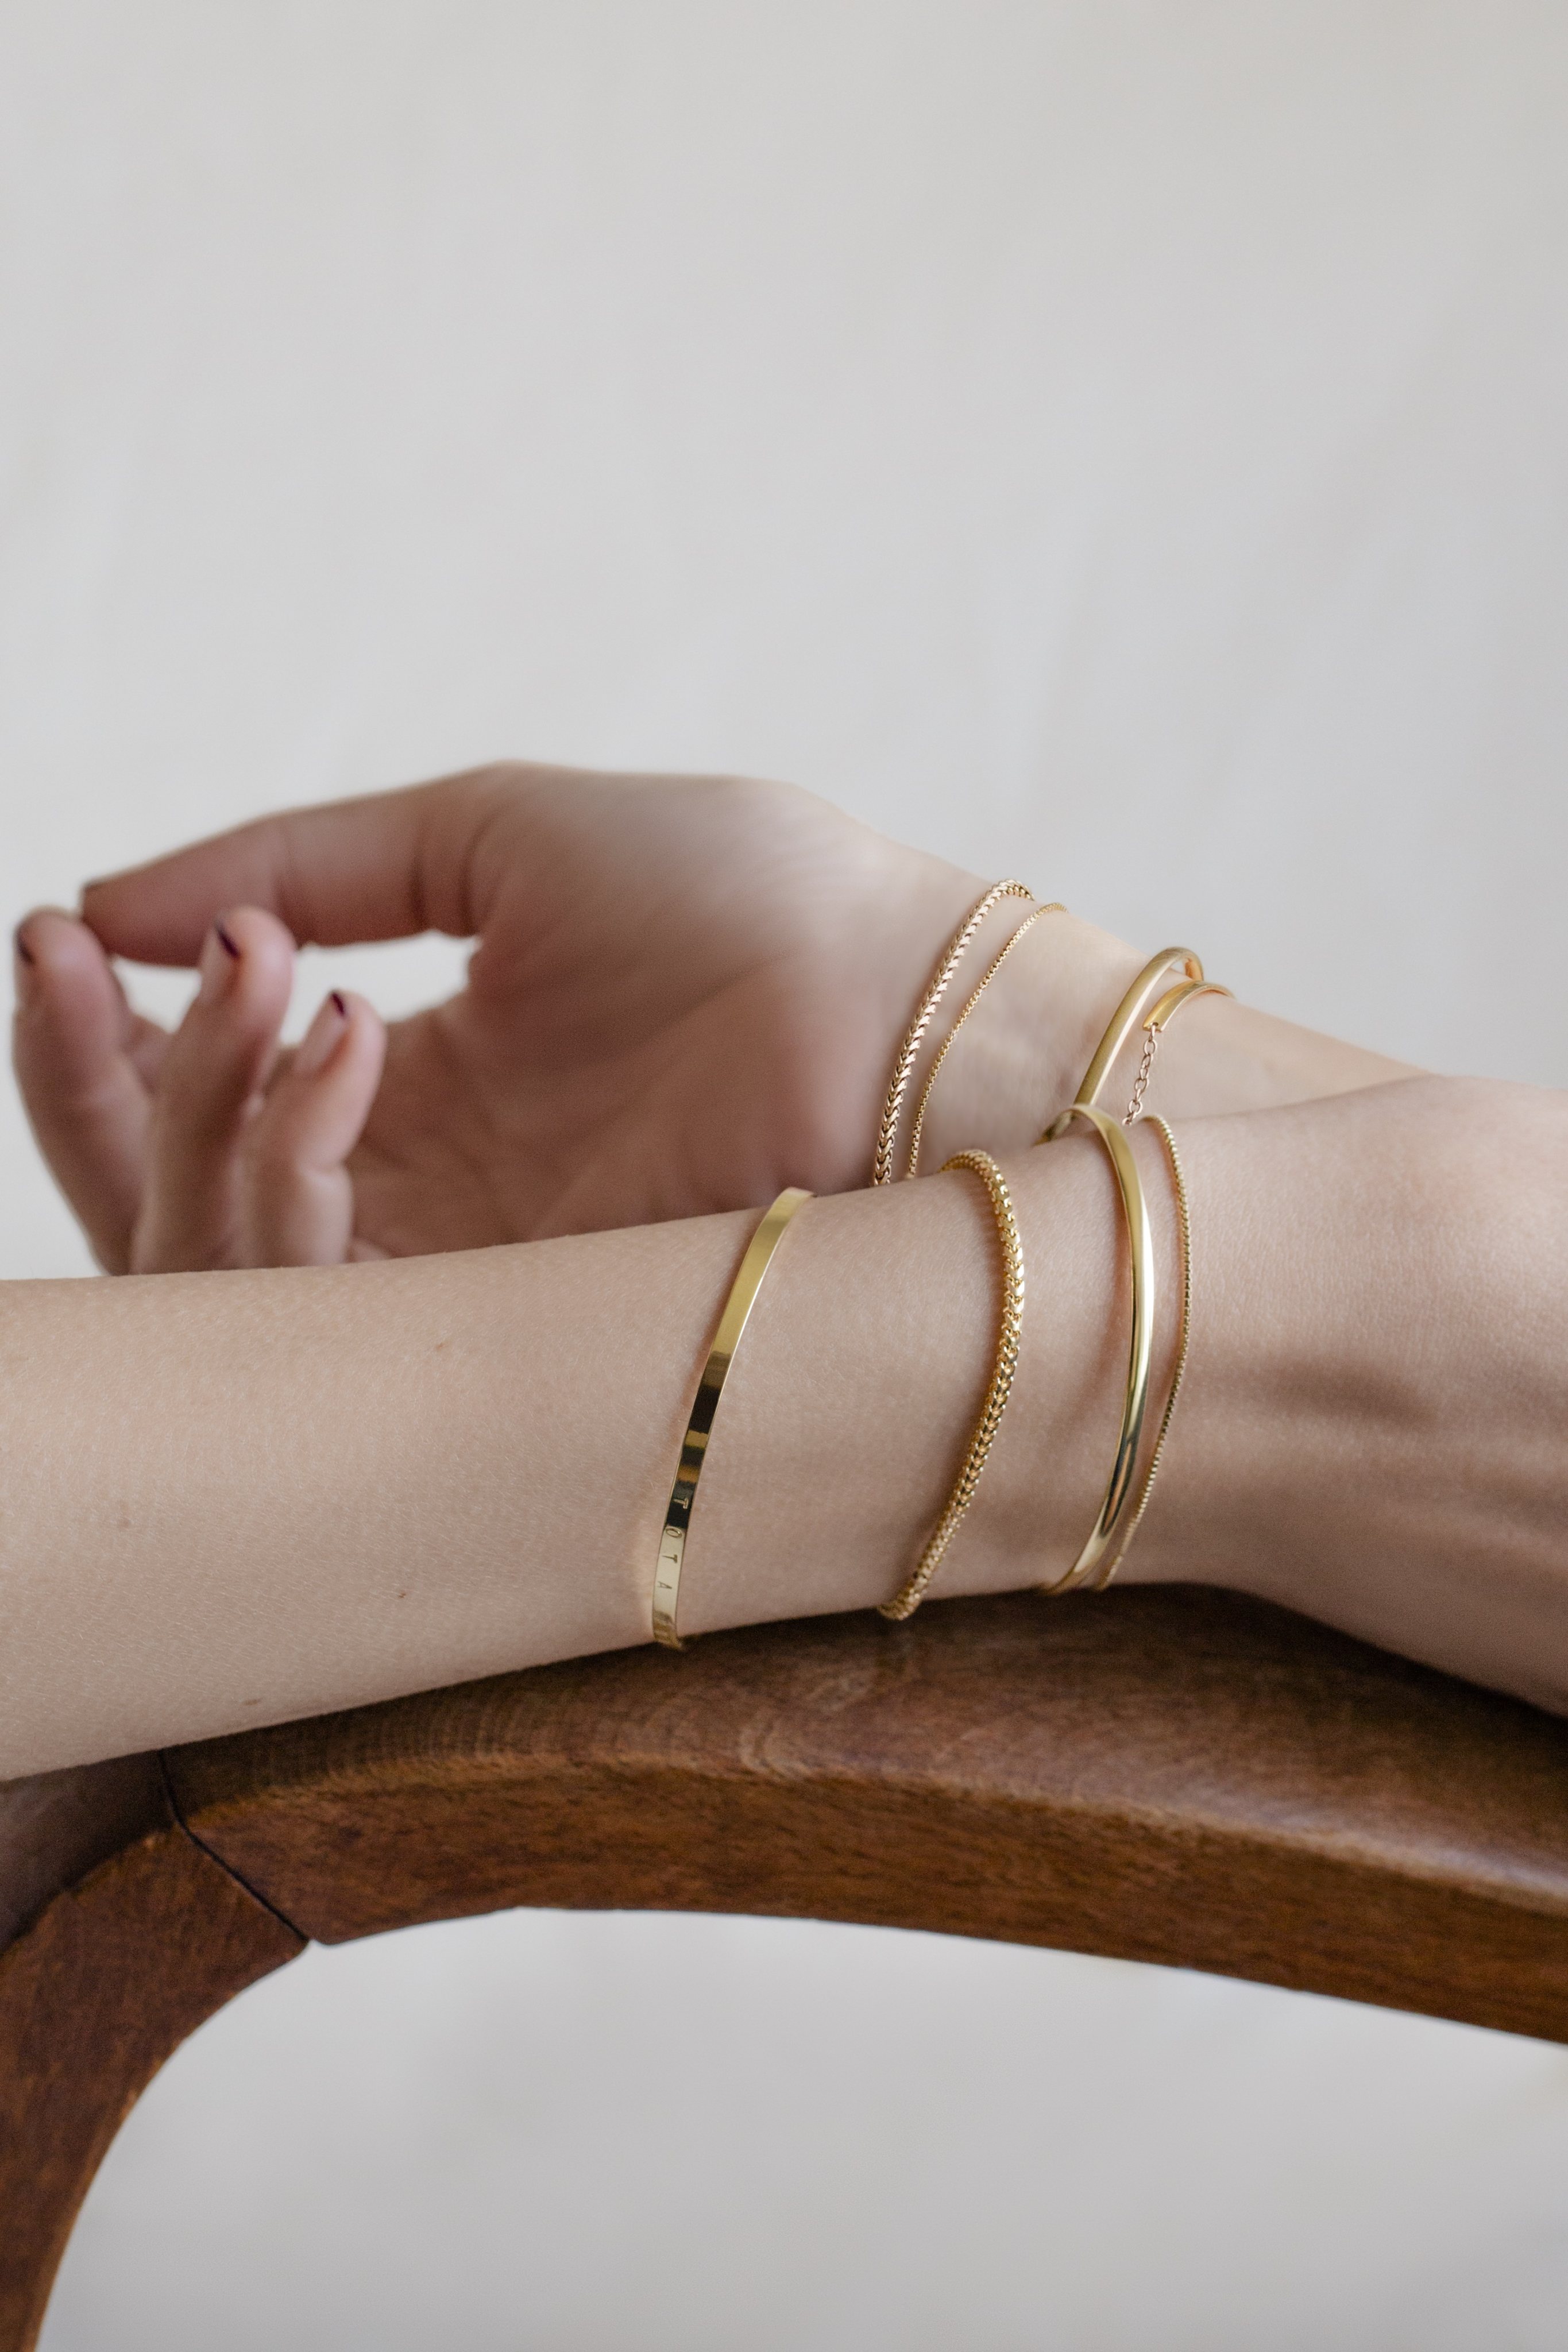 Welded bracelets are winning over Gen Z: a form of permanent jewellery that has proved a TikTok sensation – think of them as next-gen friendship bracelets. Photo: Handout